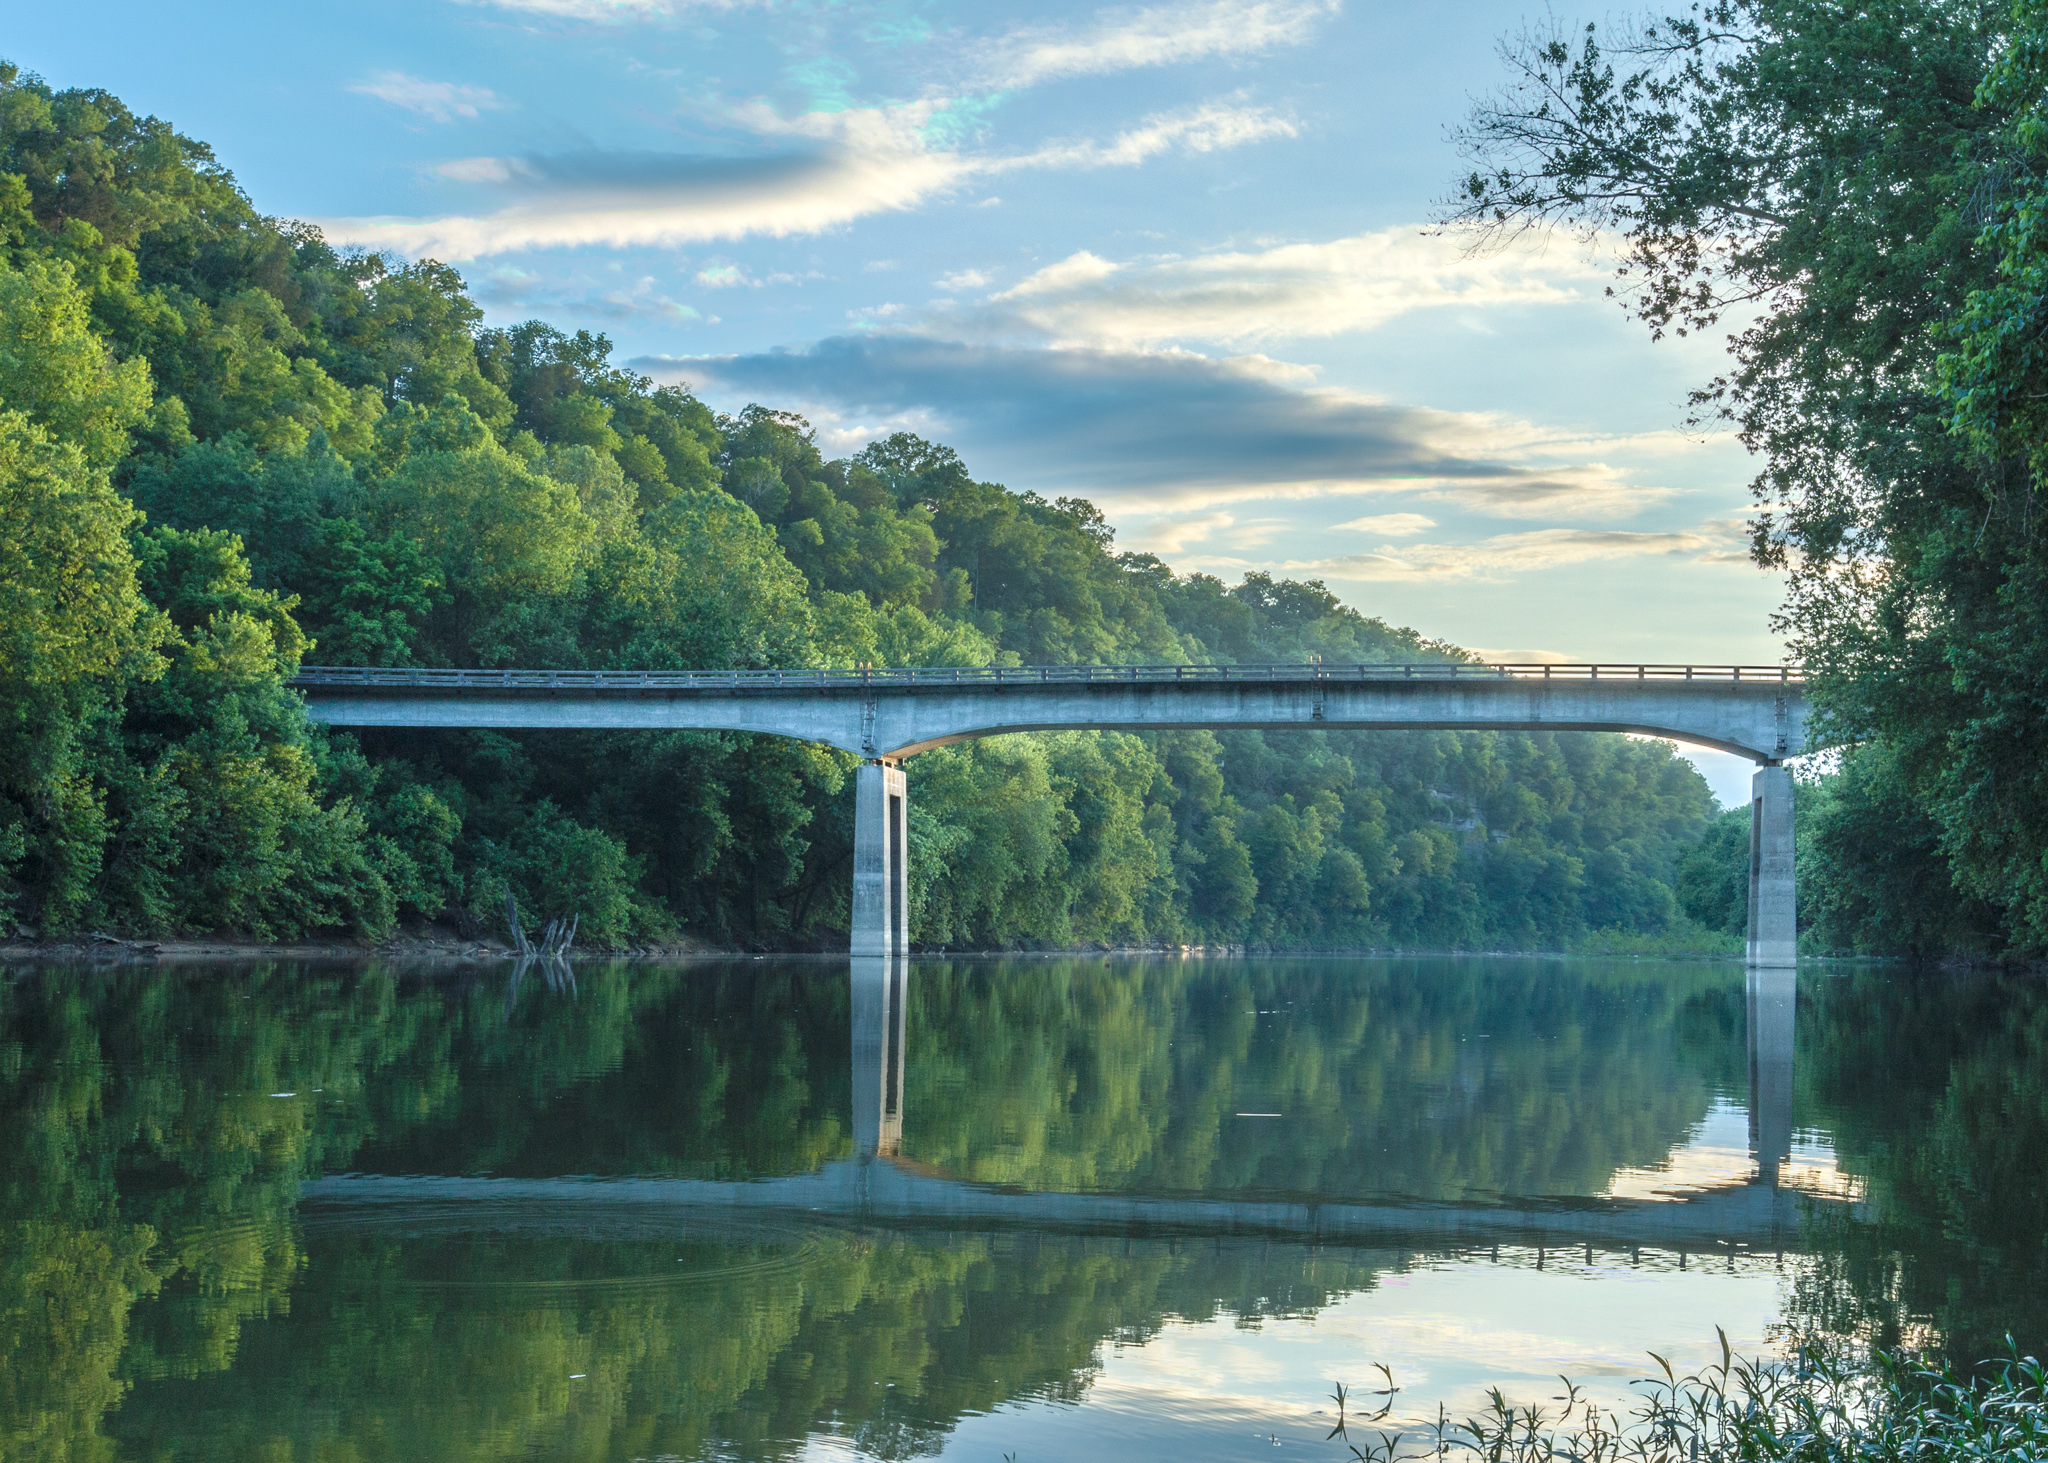 Landscape surrounding the Kentucky bridge.